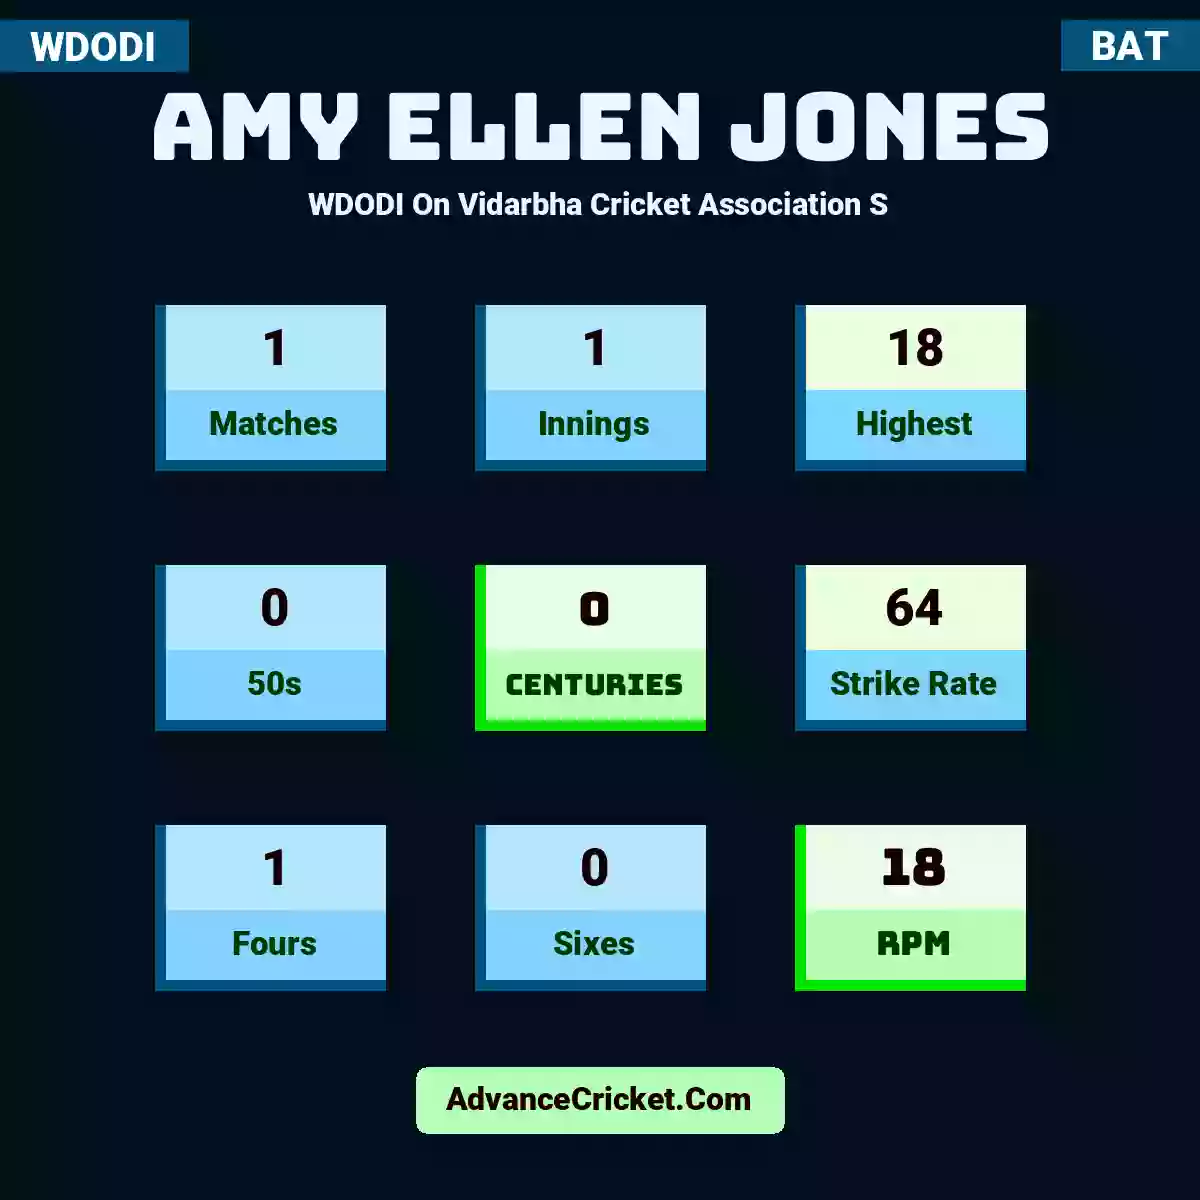 Amy Ellen Jones WDODI  On Vidarbha Cricket Association S, Amy Ellen Jones played 1 matches, scored 18 runs as highest, 0 half-centuries, and 0 centuries, with a strike rate of 64. A.Jones hit 1 fours and 0 sixes, with an RPM of 18.